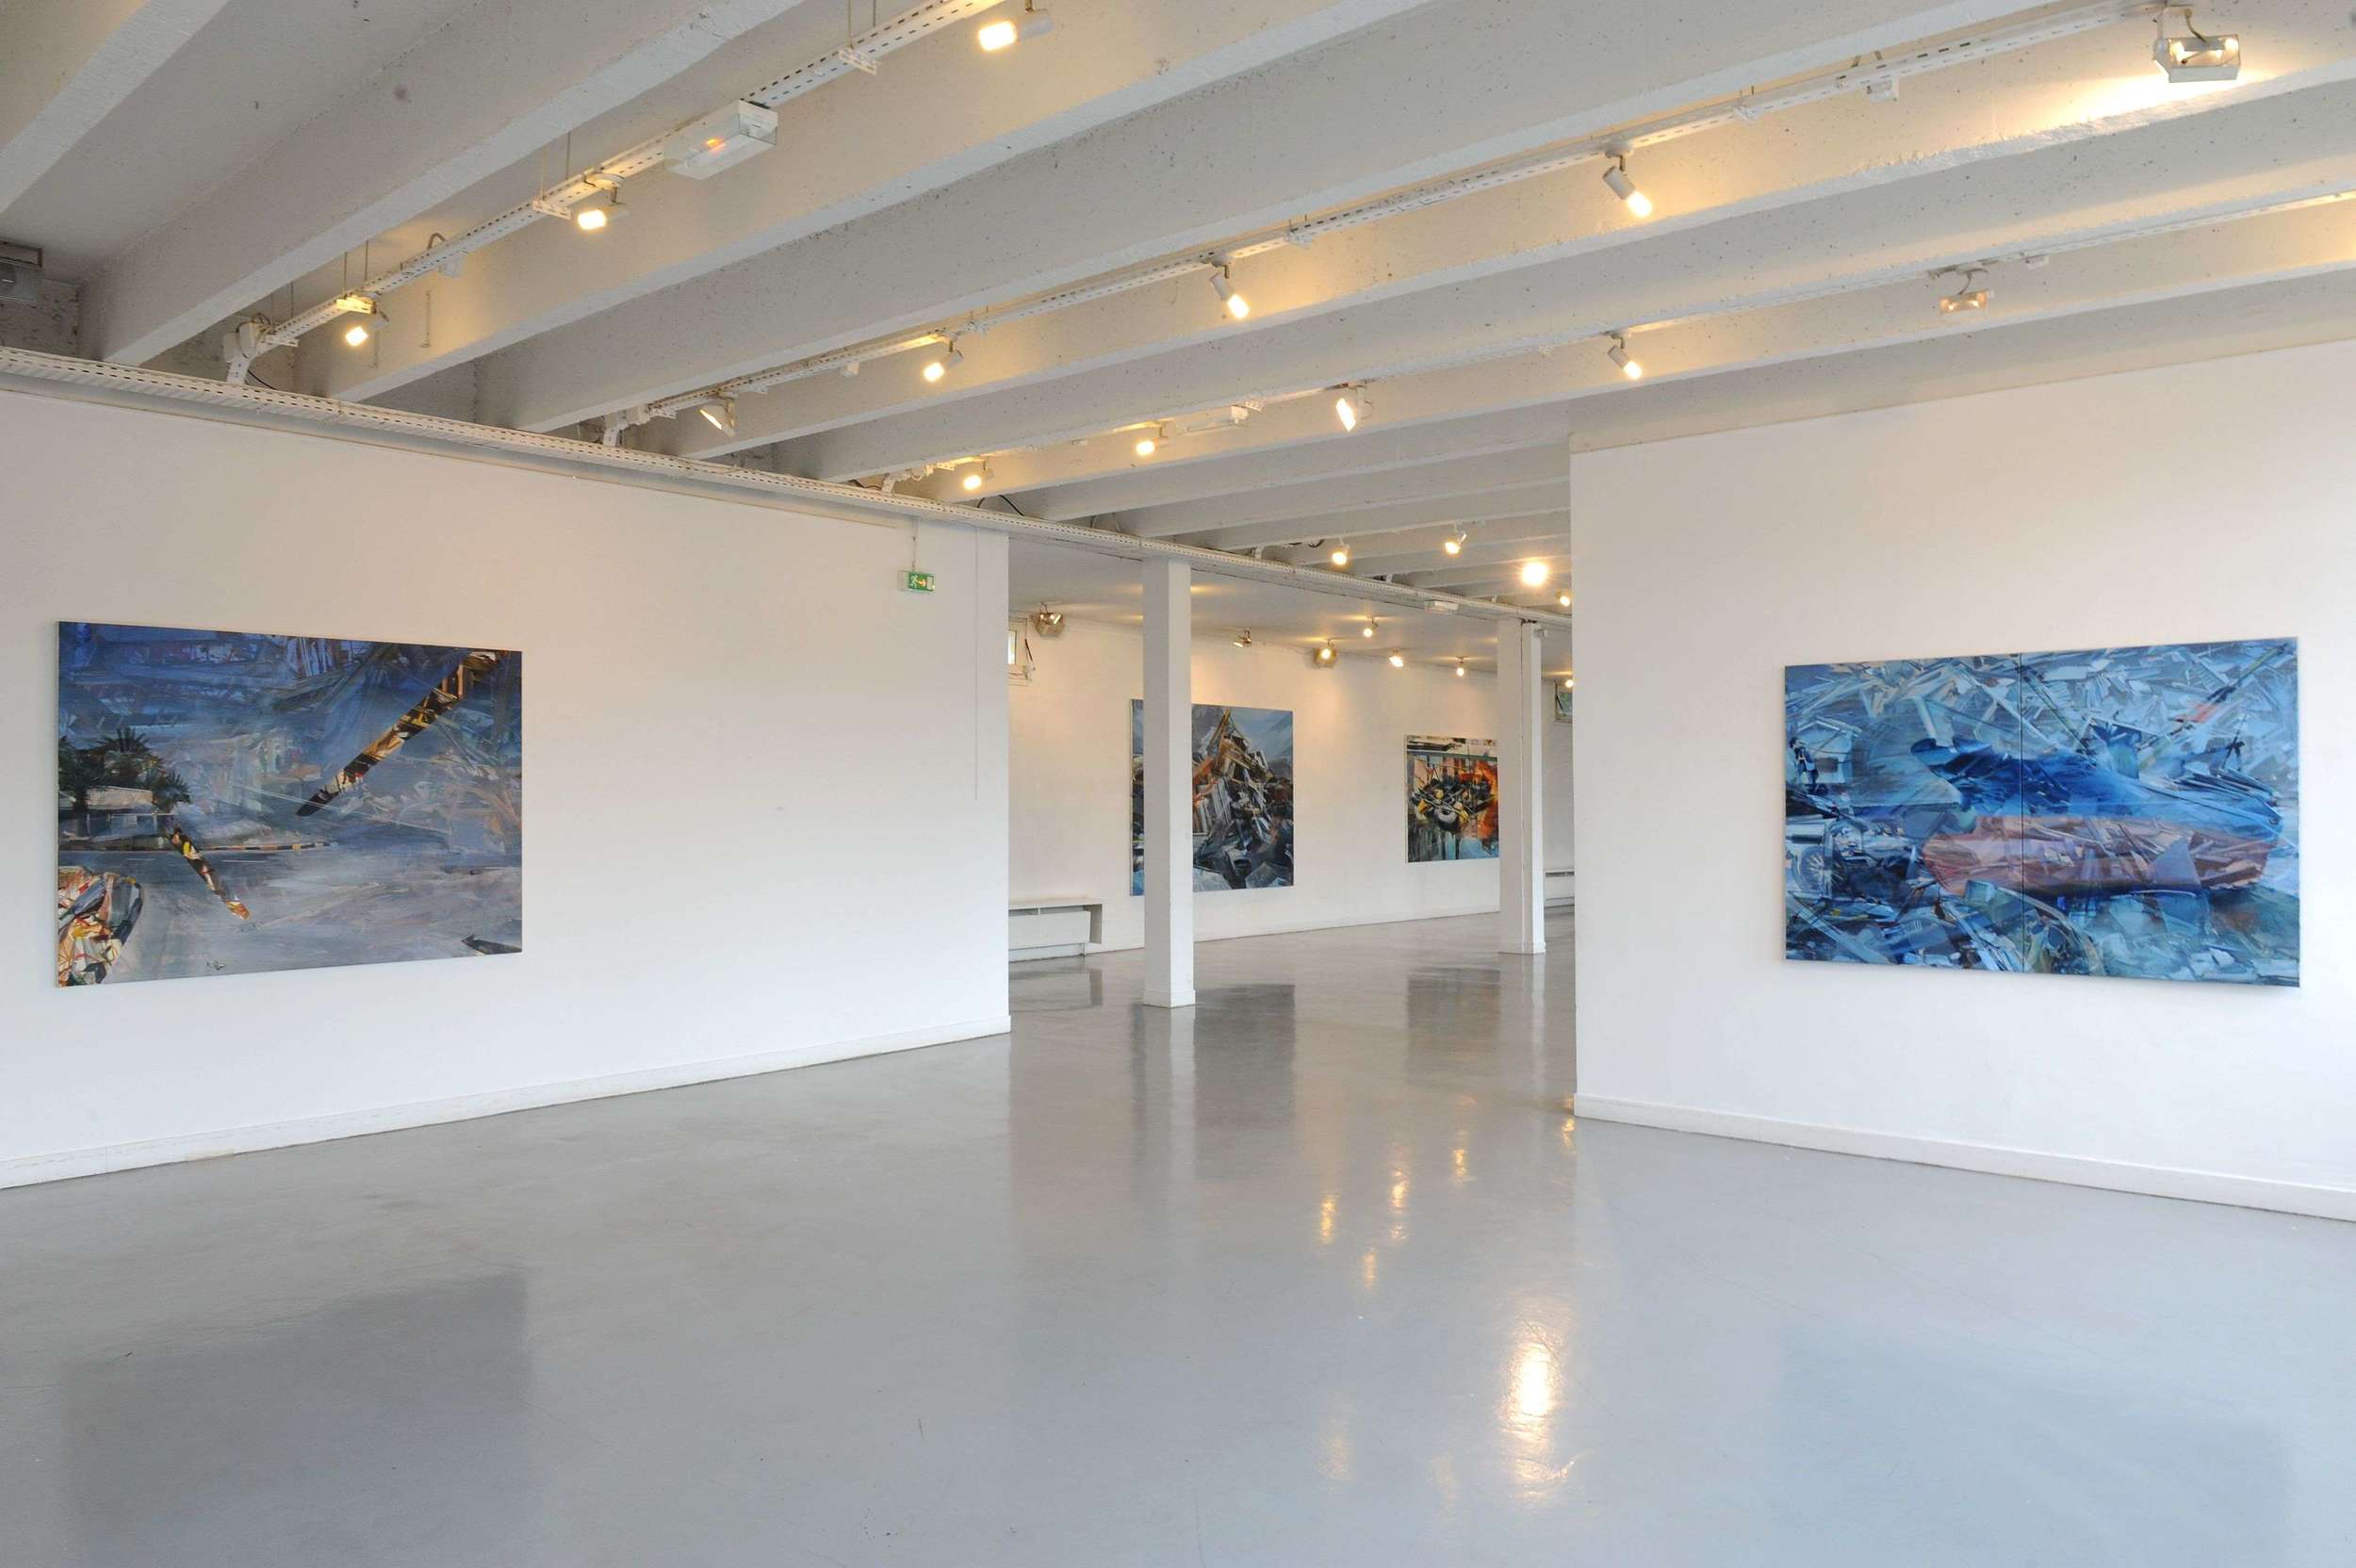   Shake Break Bounce ,&nbsp;Julio Gonzales Gallery, and Maison Marin Beaux-Arts,&nbsp;Arcueil (FR) 2012 